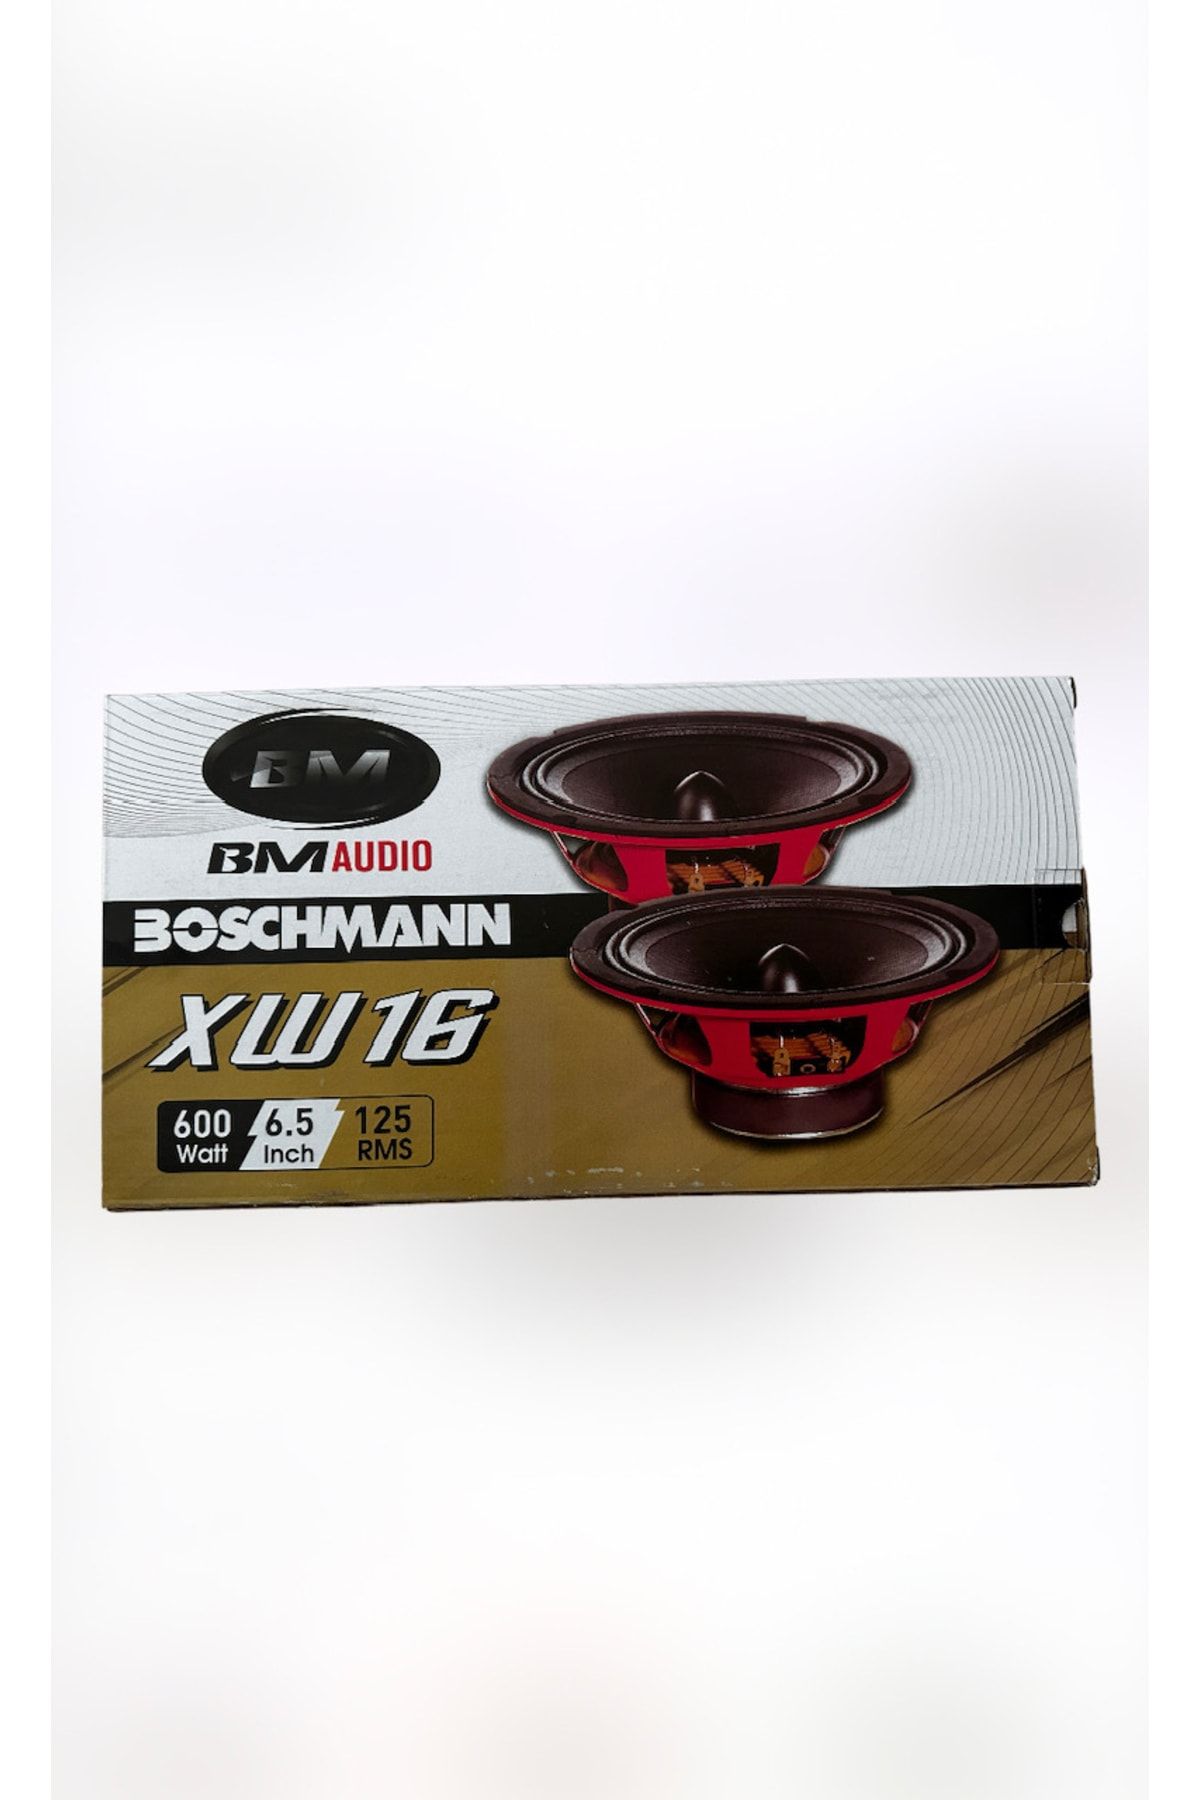 BOSHMAN Boschmann Xw-16 Ads Bm Audio 16 Cm Midrange Hoparlör 125w Rms 600w Maksimum( 2 Adet )